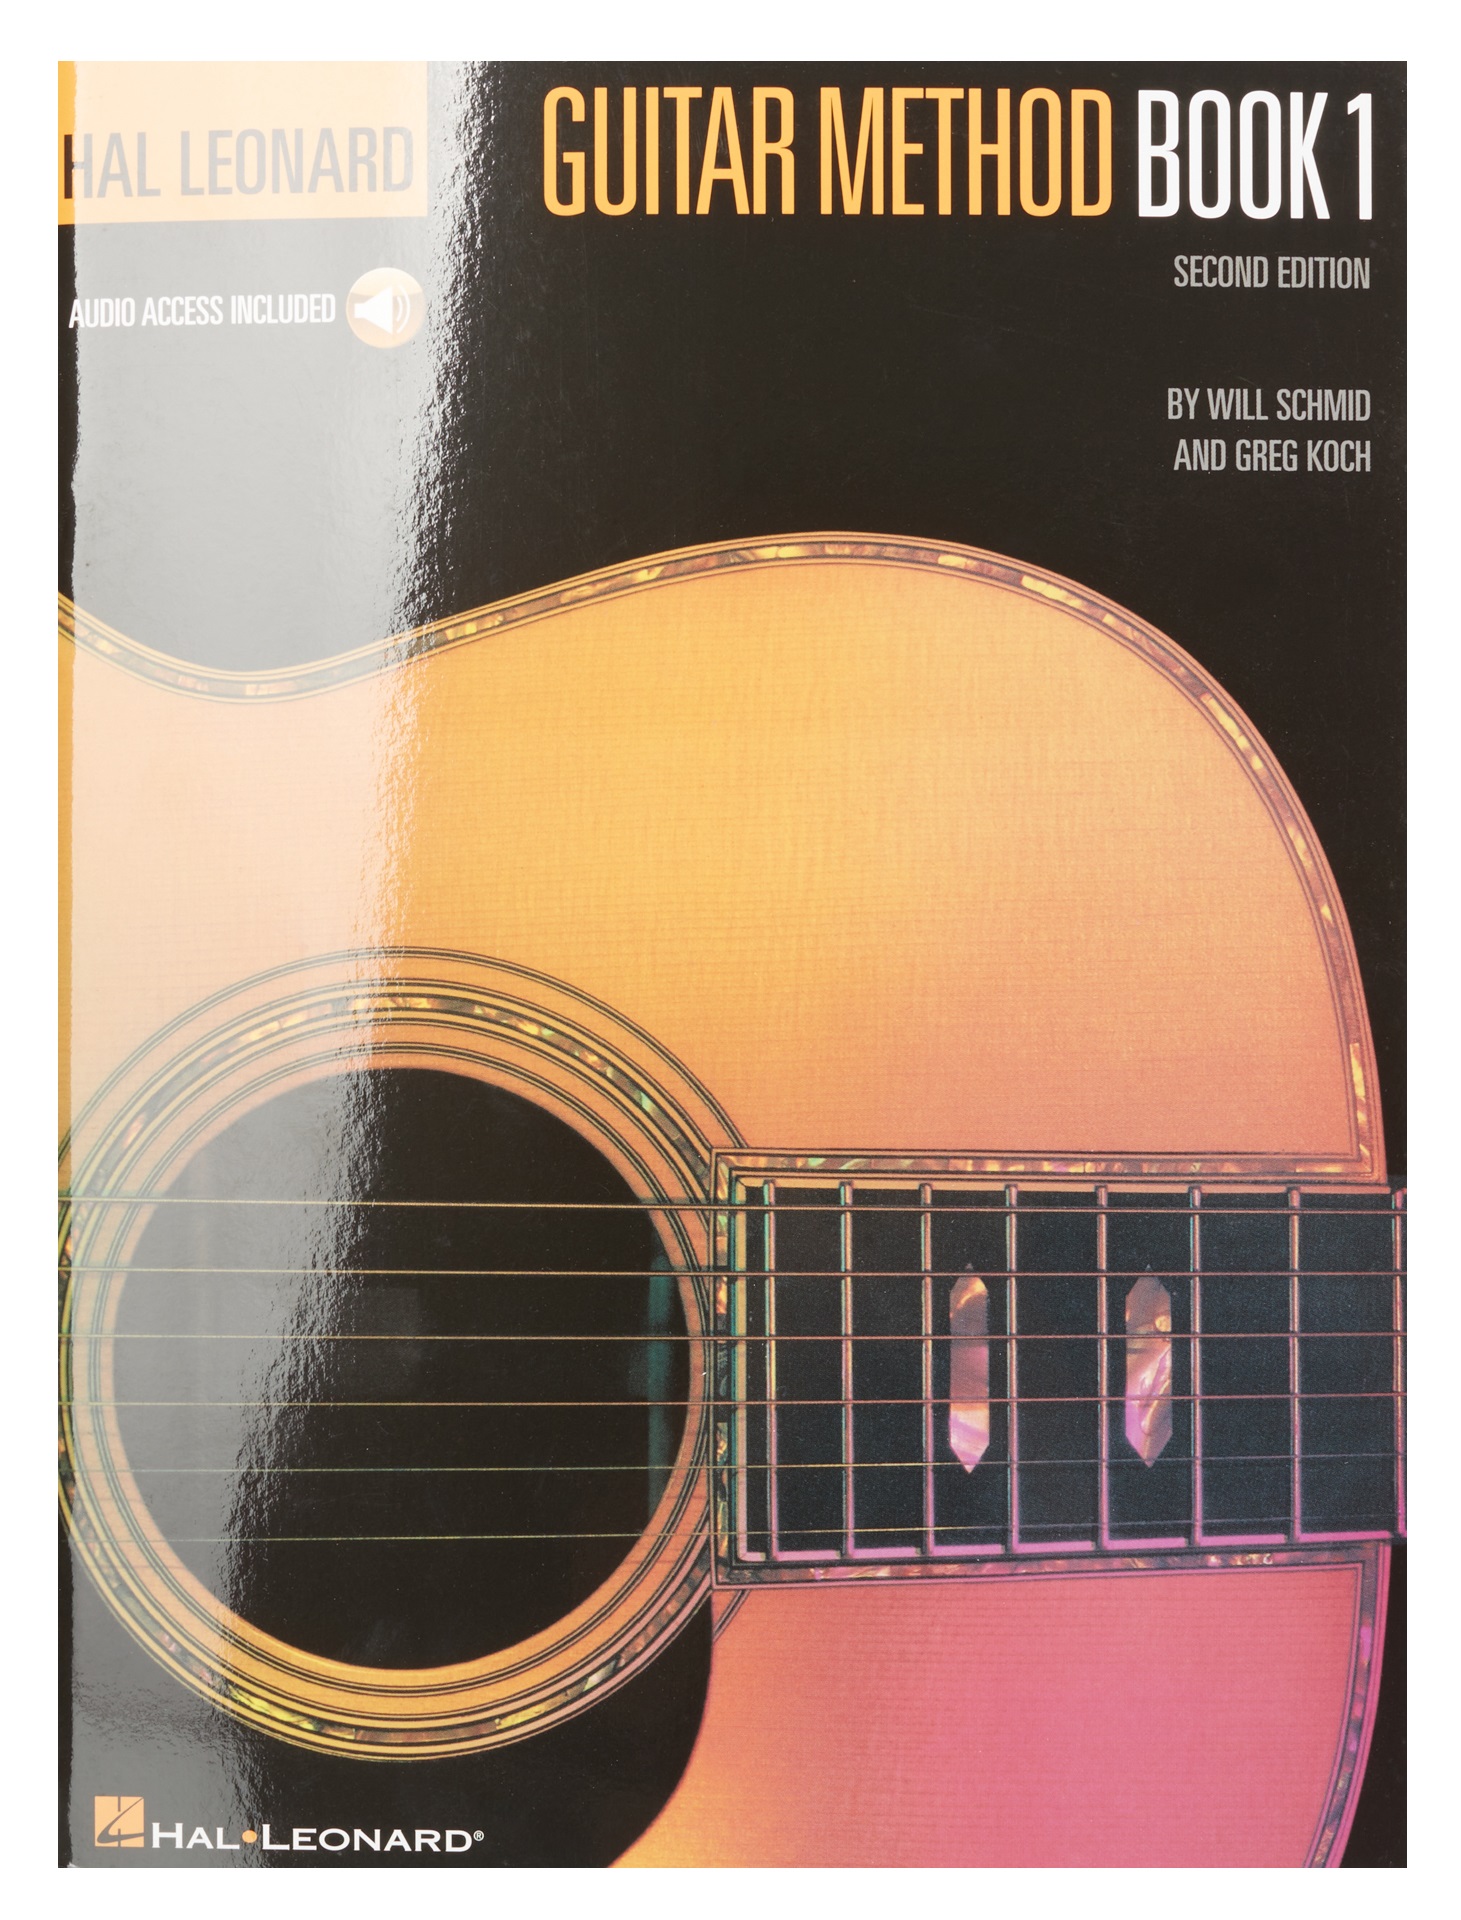 MS Hal Leonard Guitar Method Book 1 Second Edition